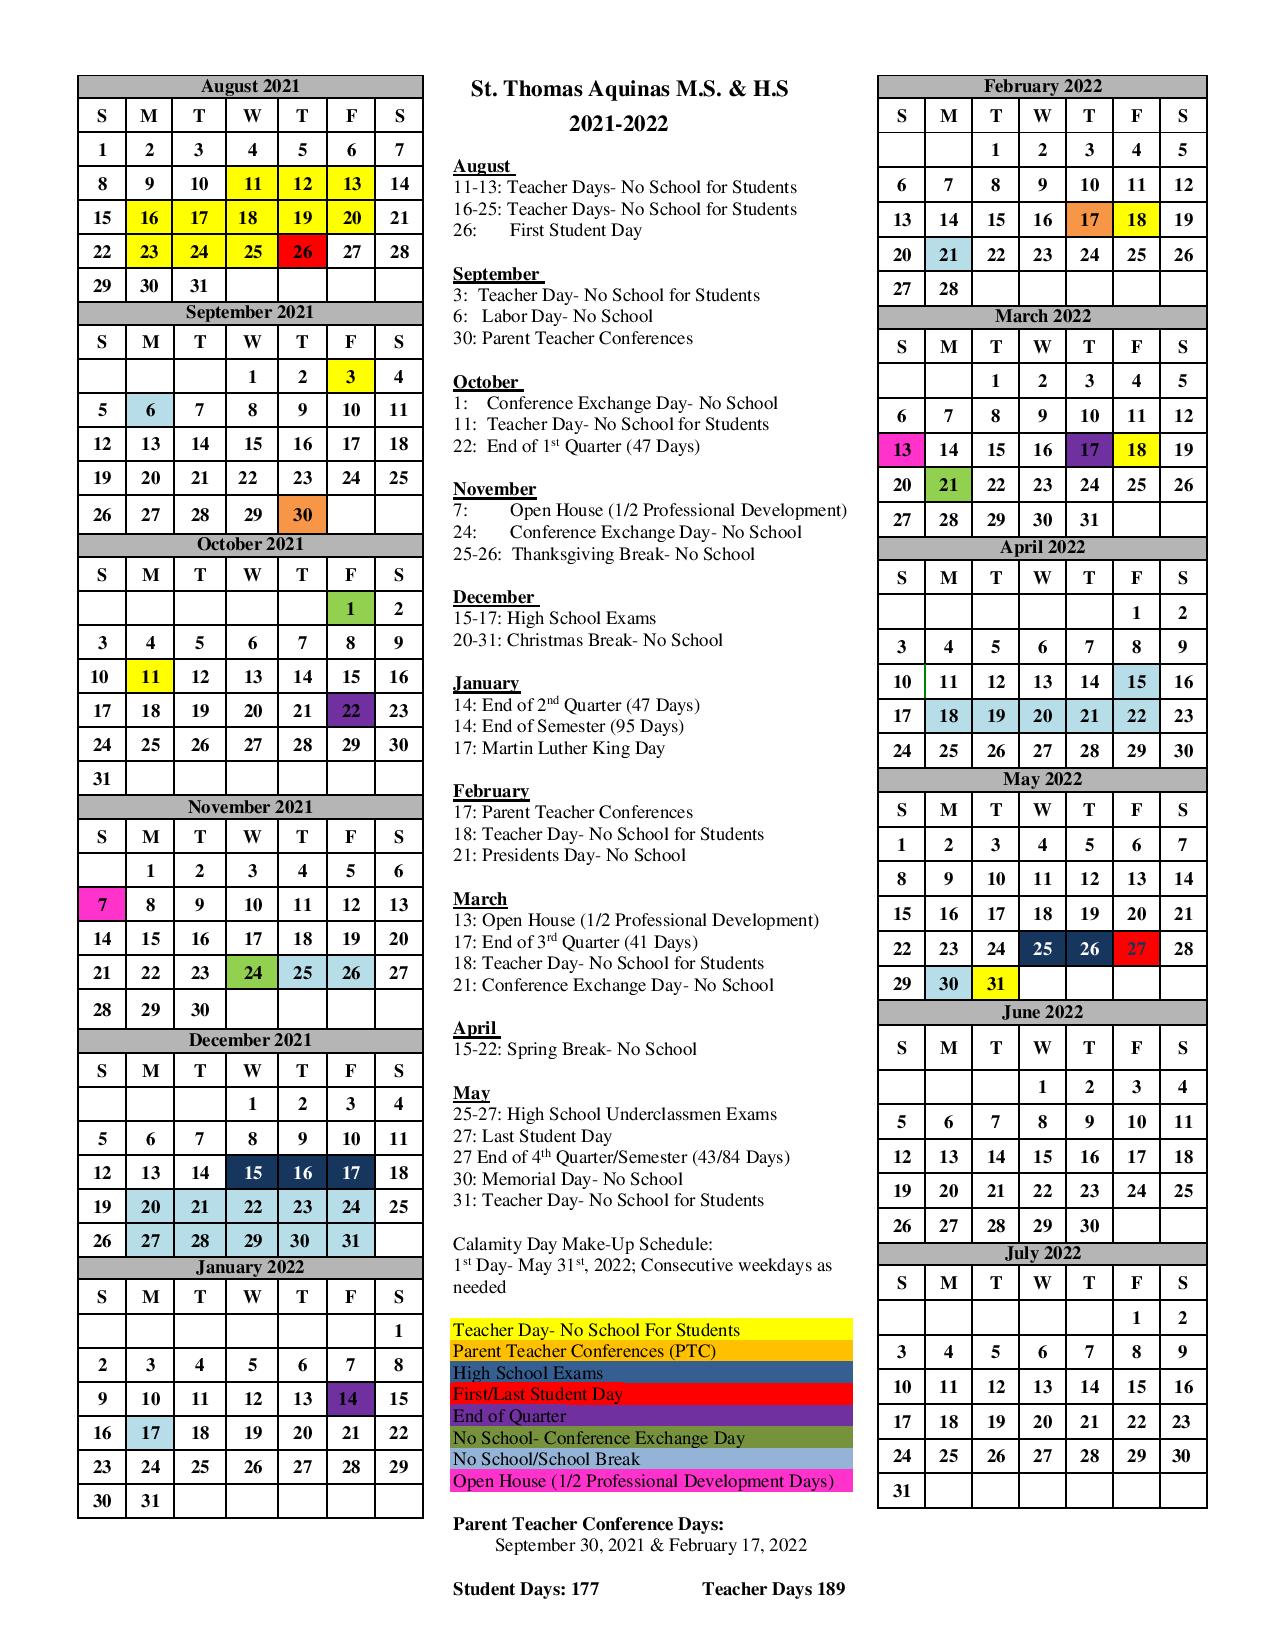 St Thomas Academic Calendar 2022 2023 Academic Calendar 2021-22